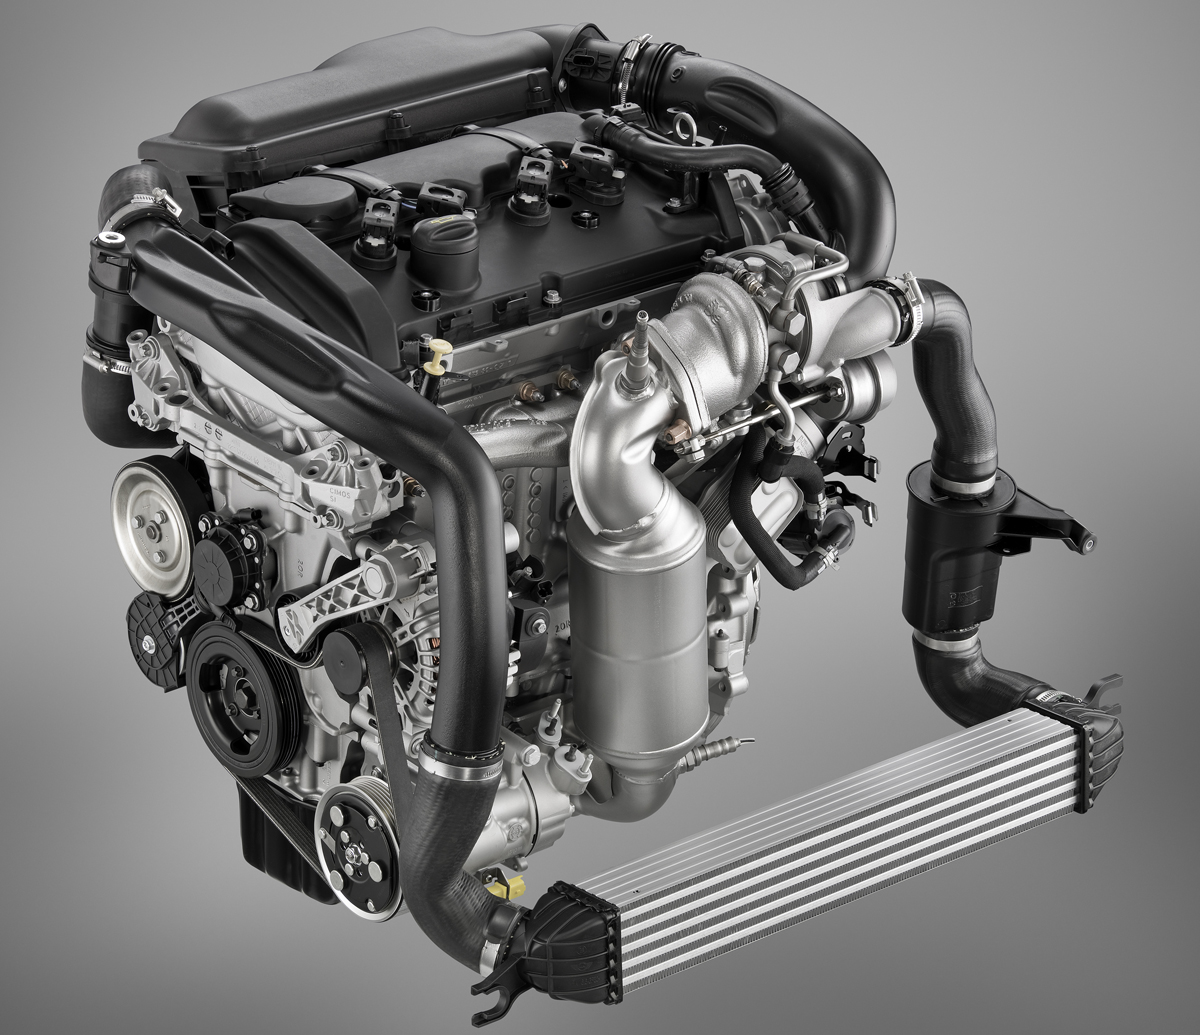  1.6-litre MINI TwinPower Turbo in-line gasoline engine